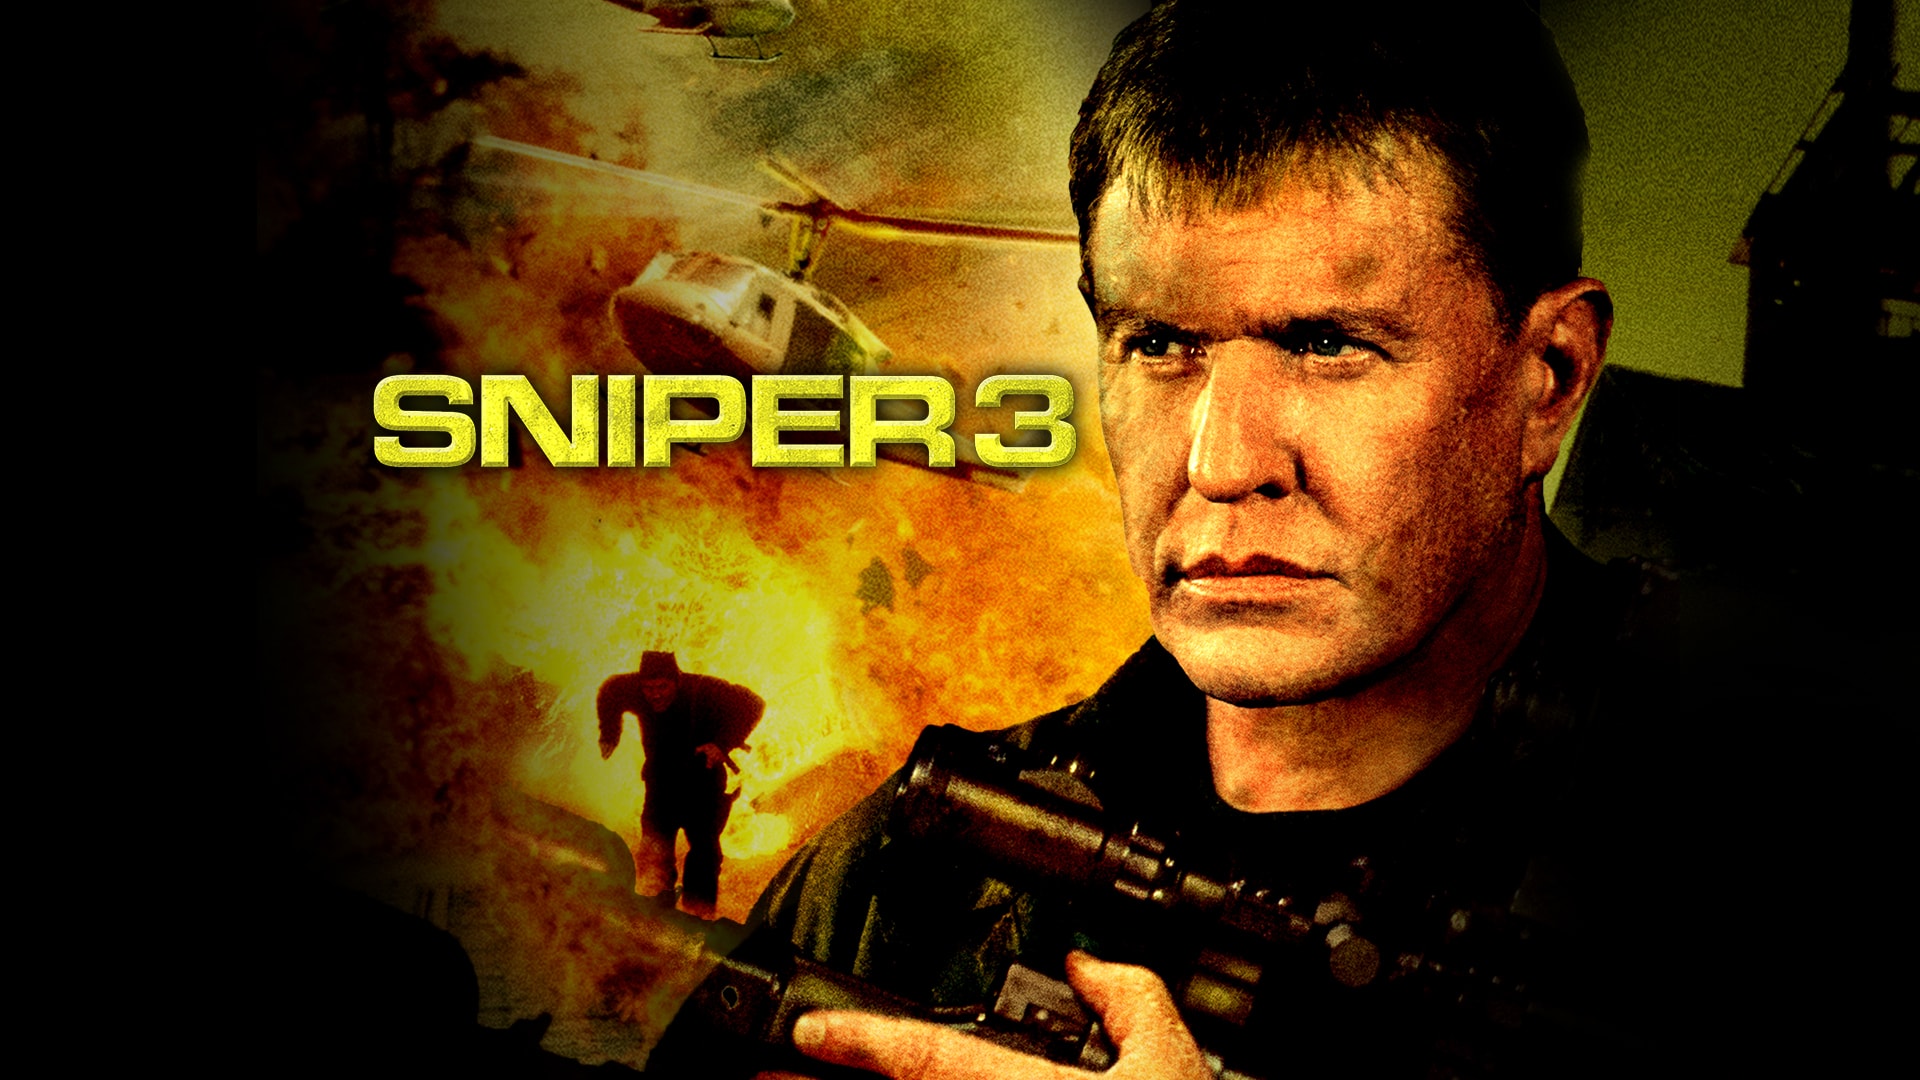 Watch Sniper 3 Online | Stream Full Movies